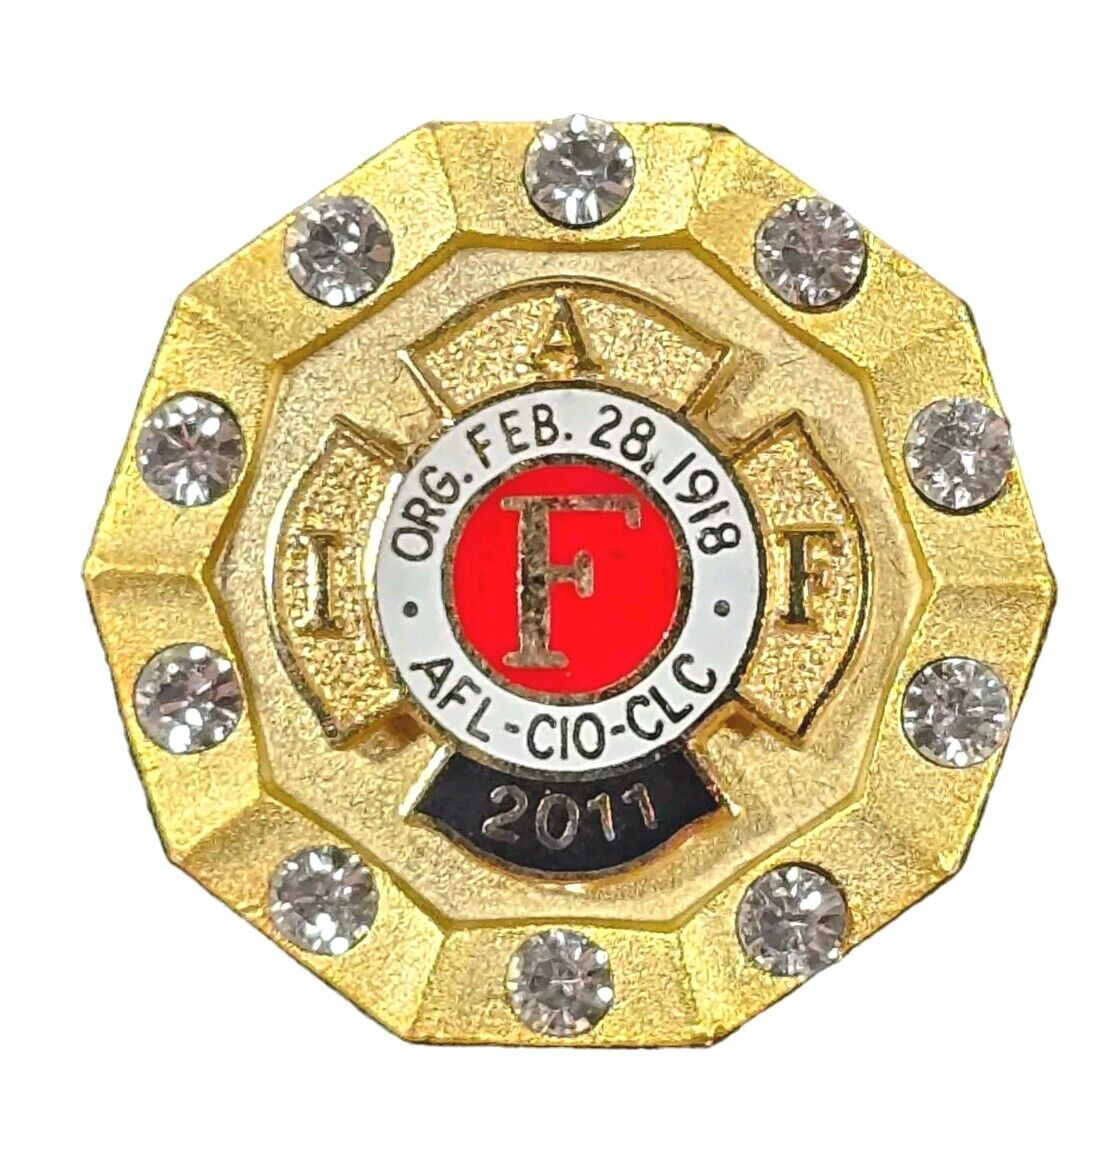 AFL-CIO-CLC Goldtone Union Pin Enamel w/ Rhinestones in Original Box